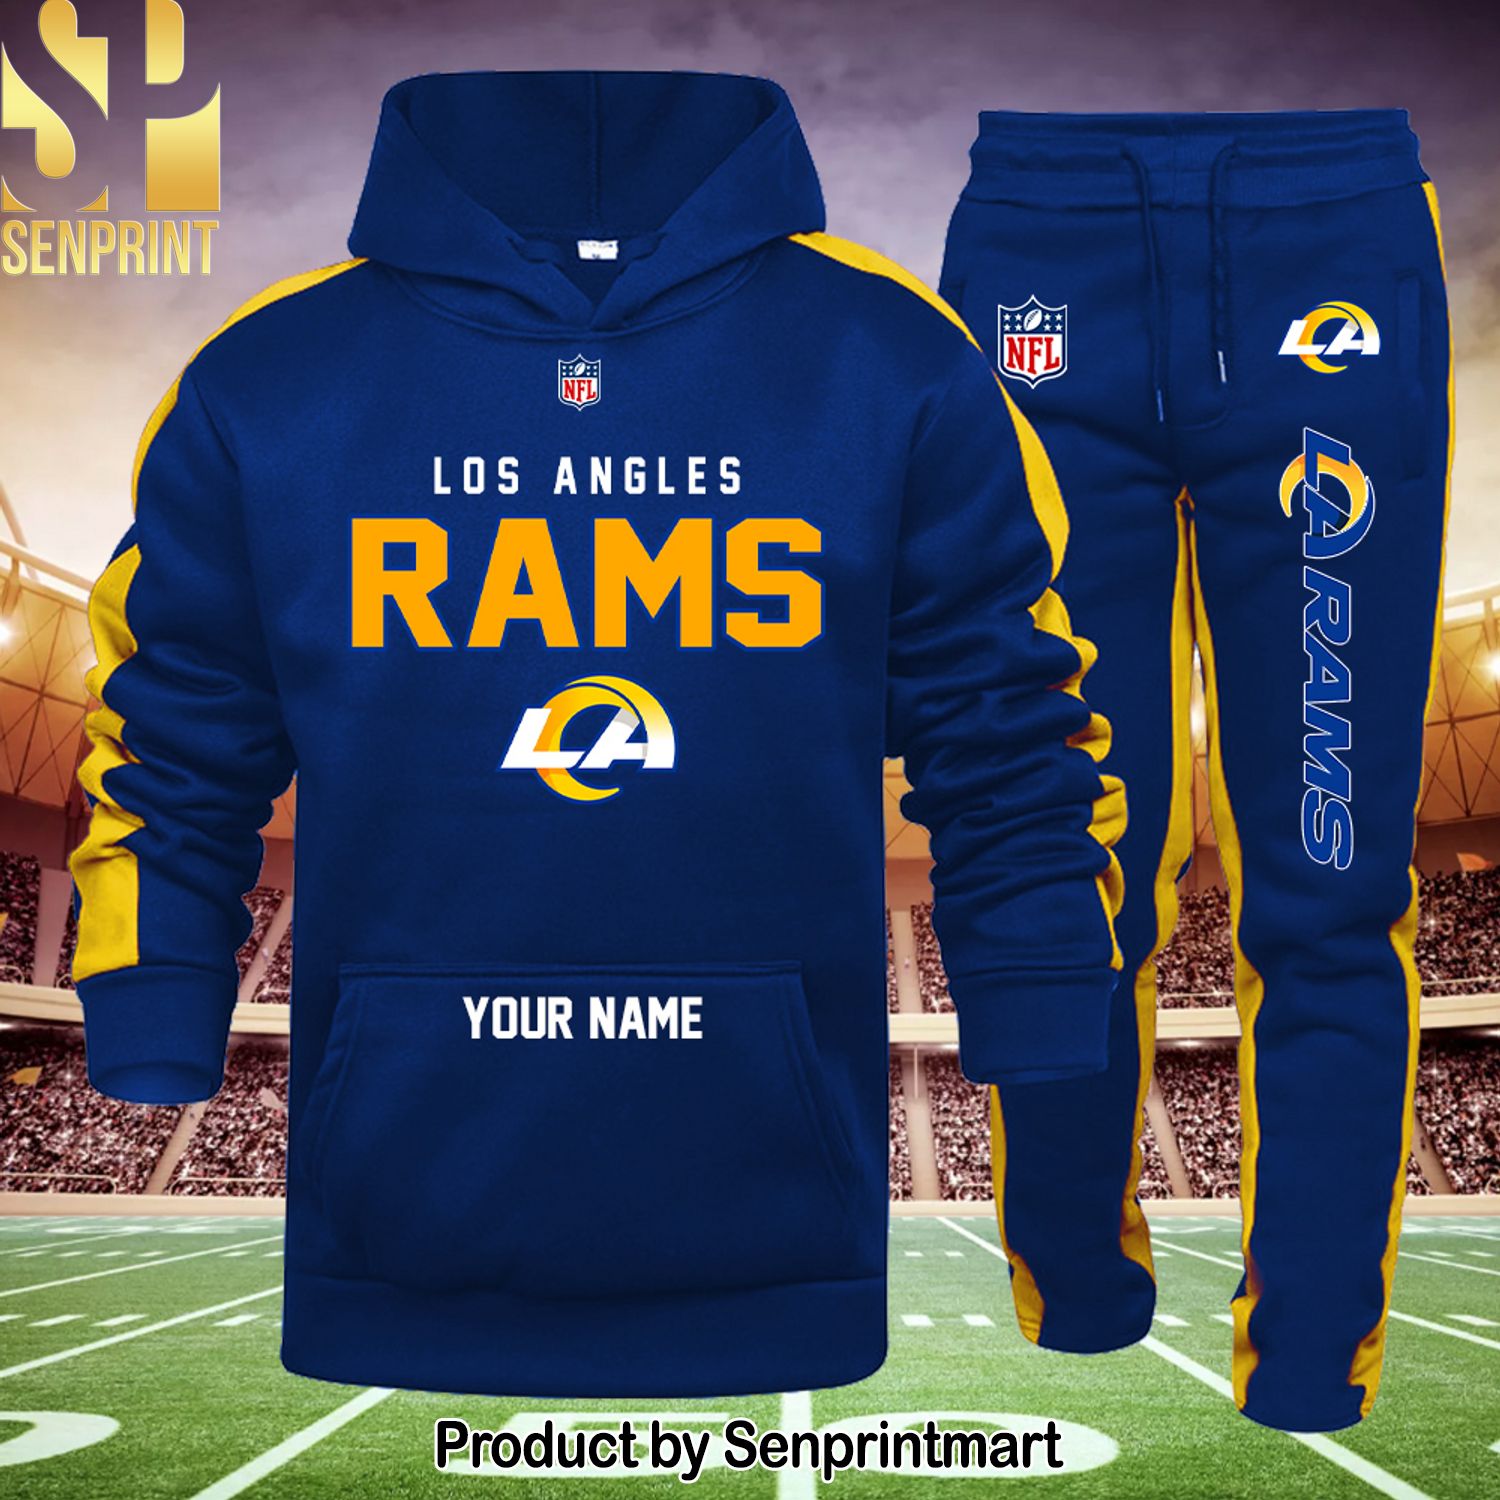 NFL Los Angeles Rams Hot Version Shirt and Sweatpants